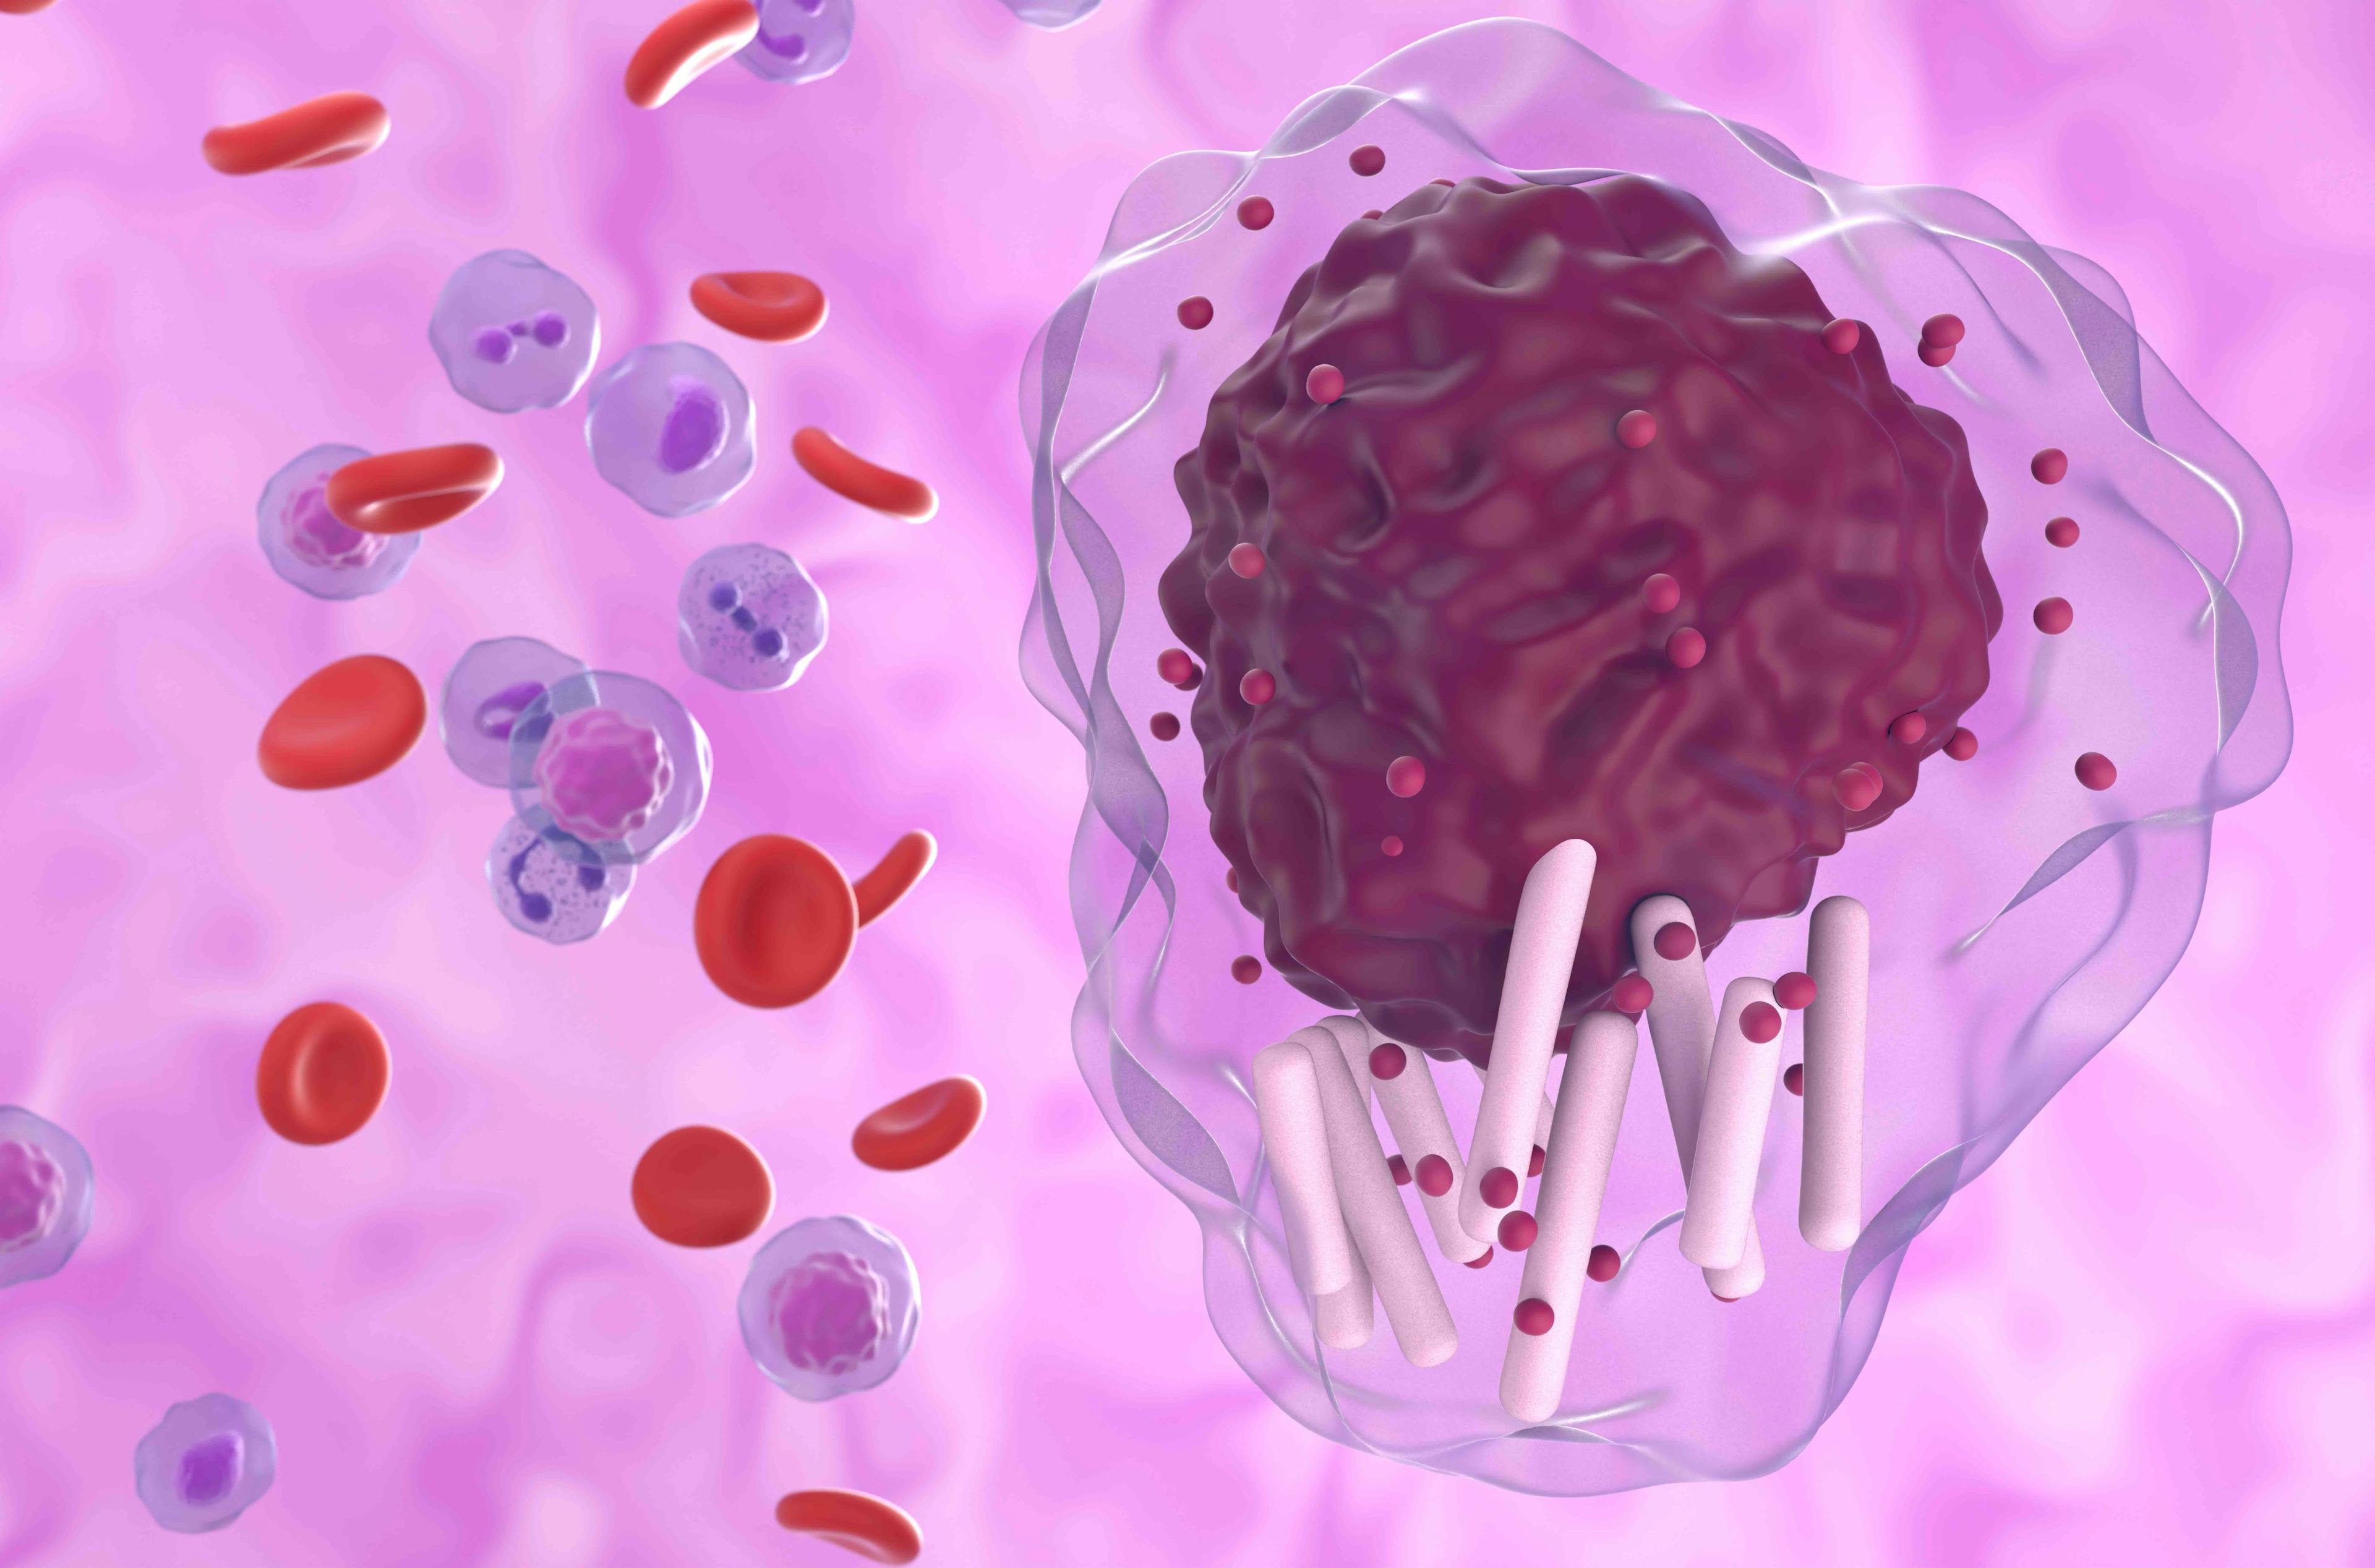 Chronic lymphocytic leukemia in blood | Image credit: LASZLO - stock.adobe.com